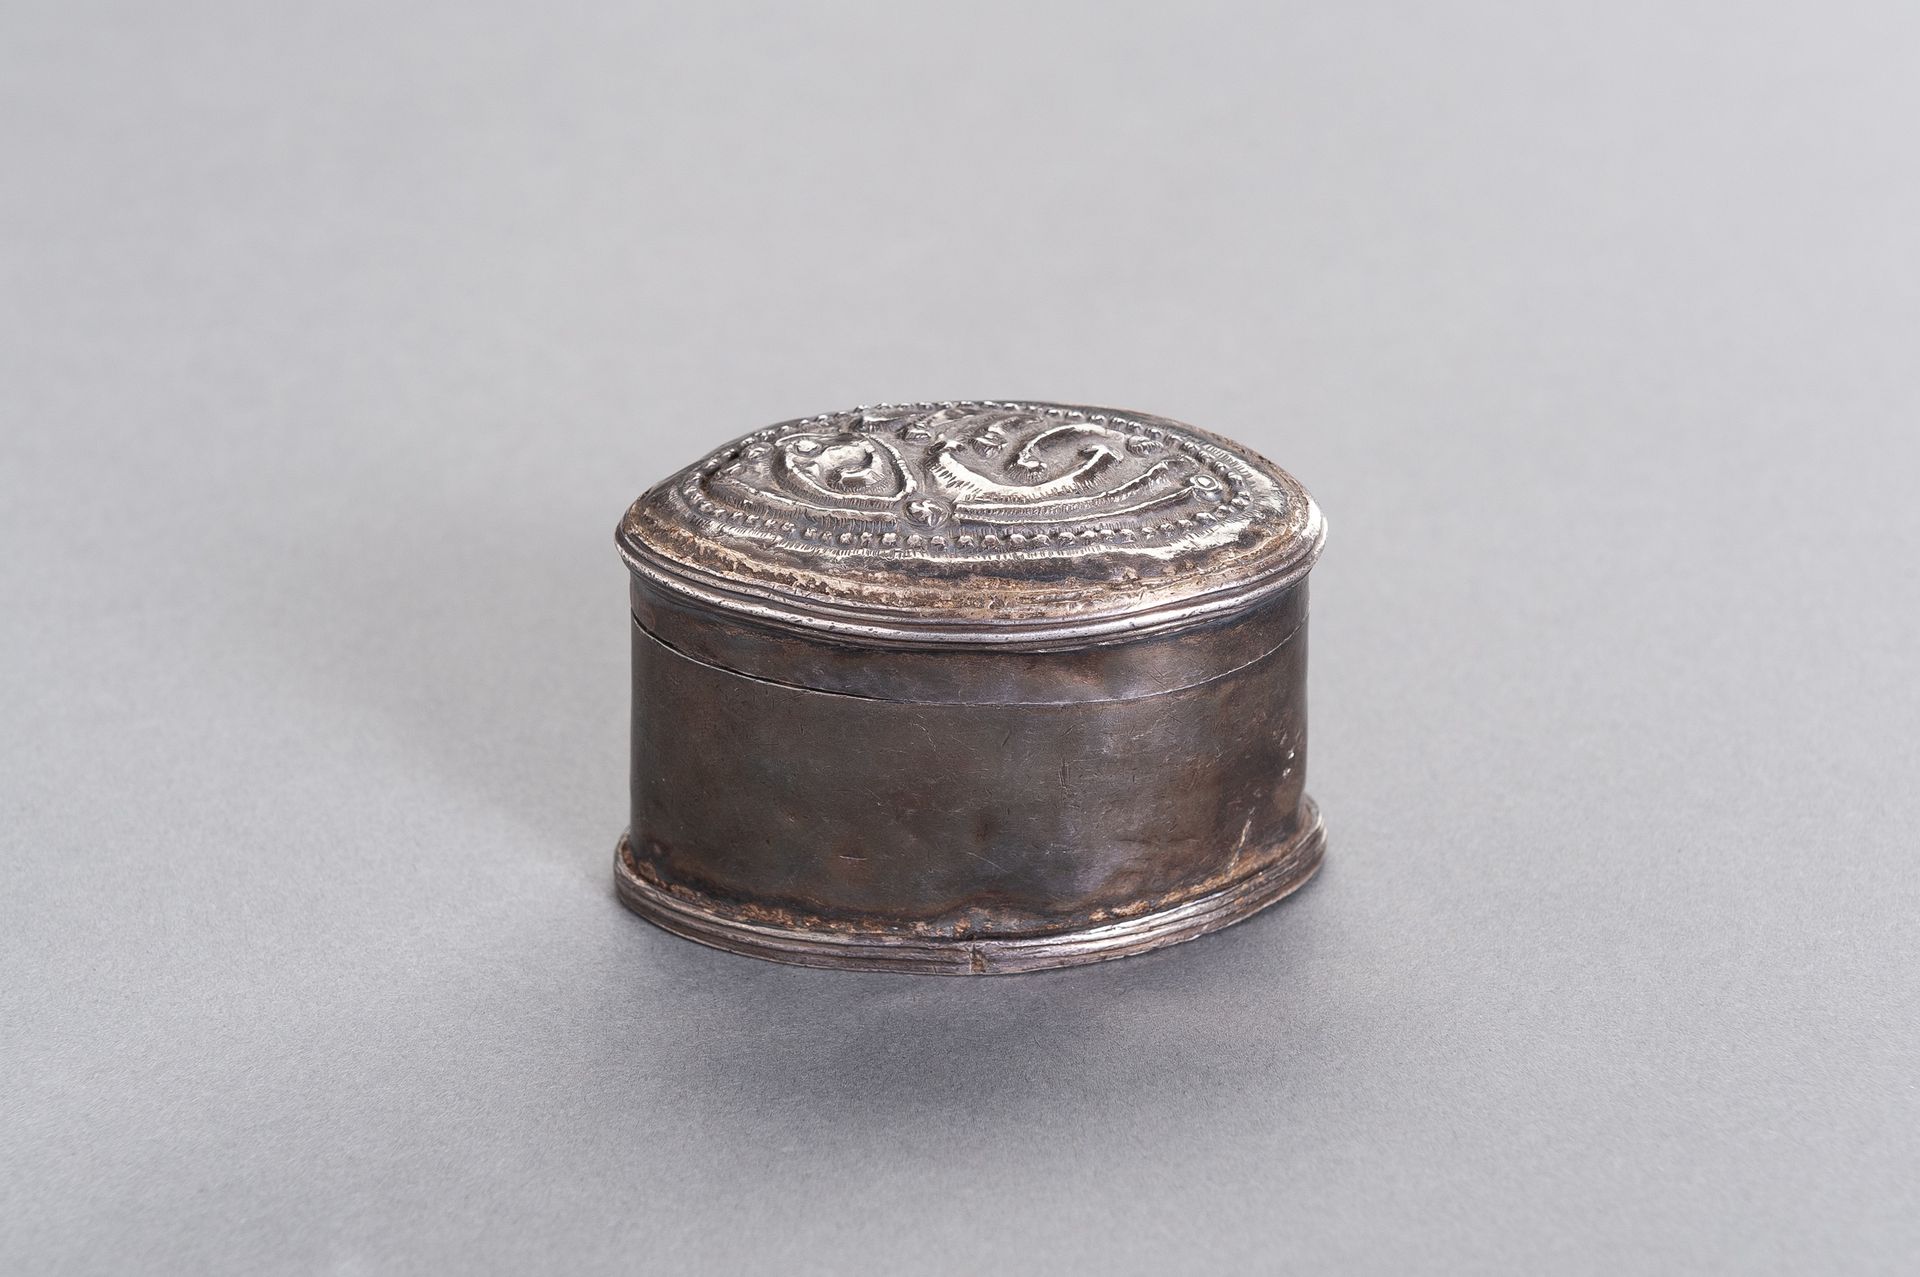 AN OVAL-SHAPED SILVER MEDICINE BOX 椭圆形银质药箱
缅甸/缅甸，19世纪。椭圆形的银盒盖上有精美的浮雕图案。

状况。有凹痕，&hellip;